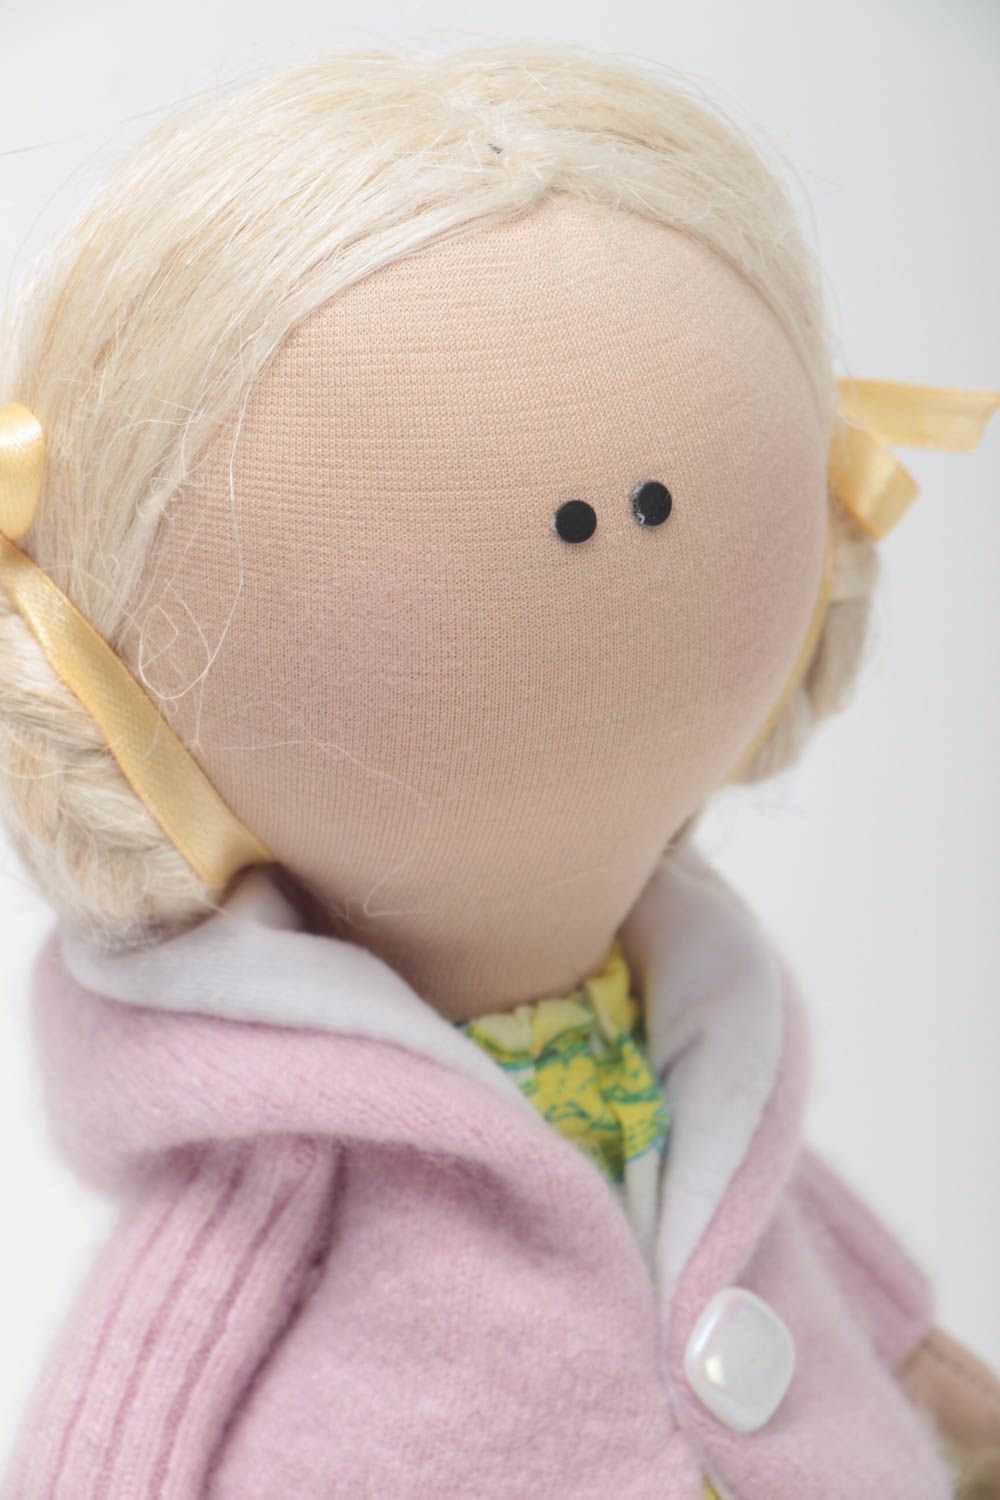 Muñeca de peluche hecha a mano juguete para niñas elemento decorativo foto 3